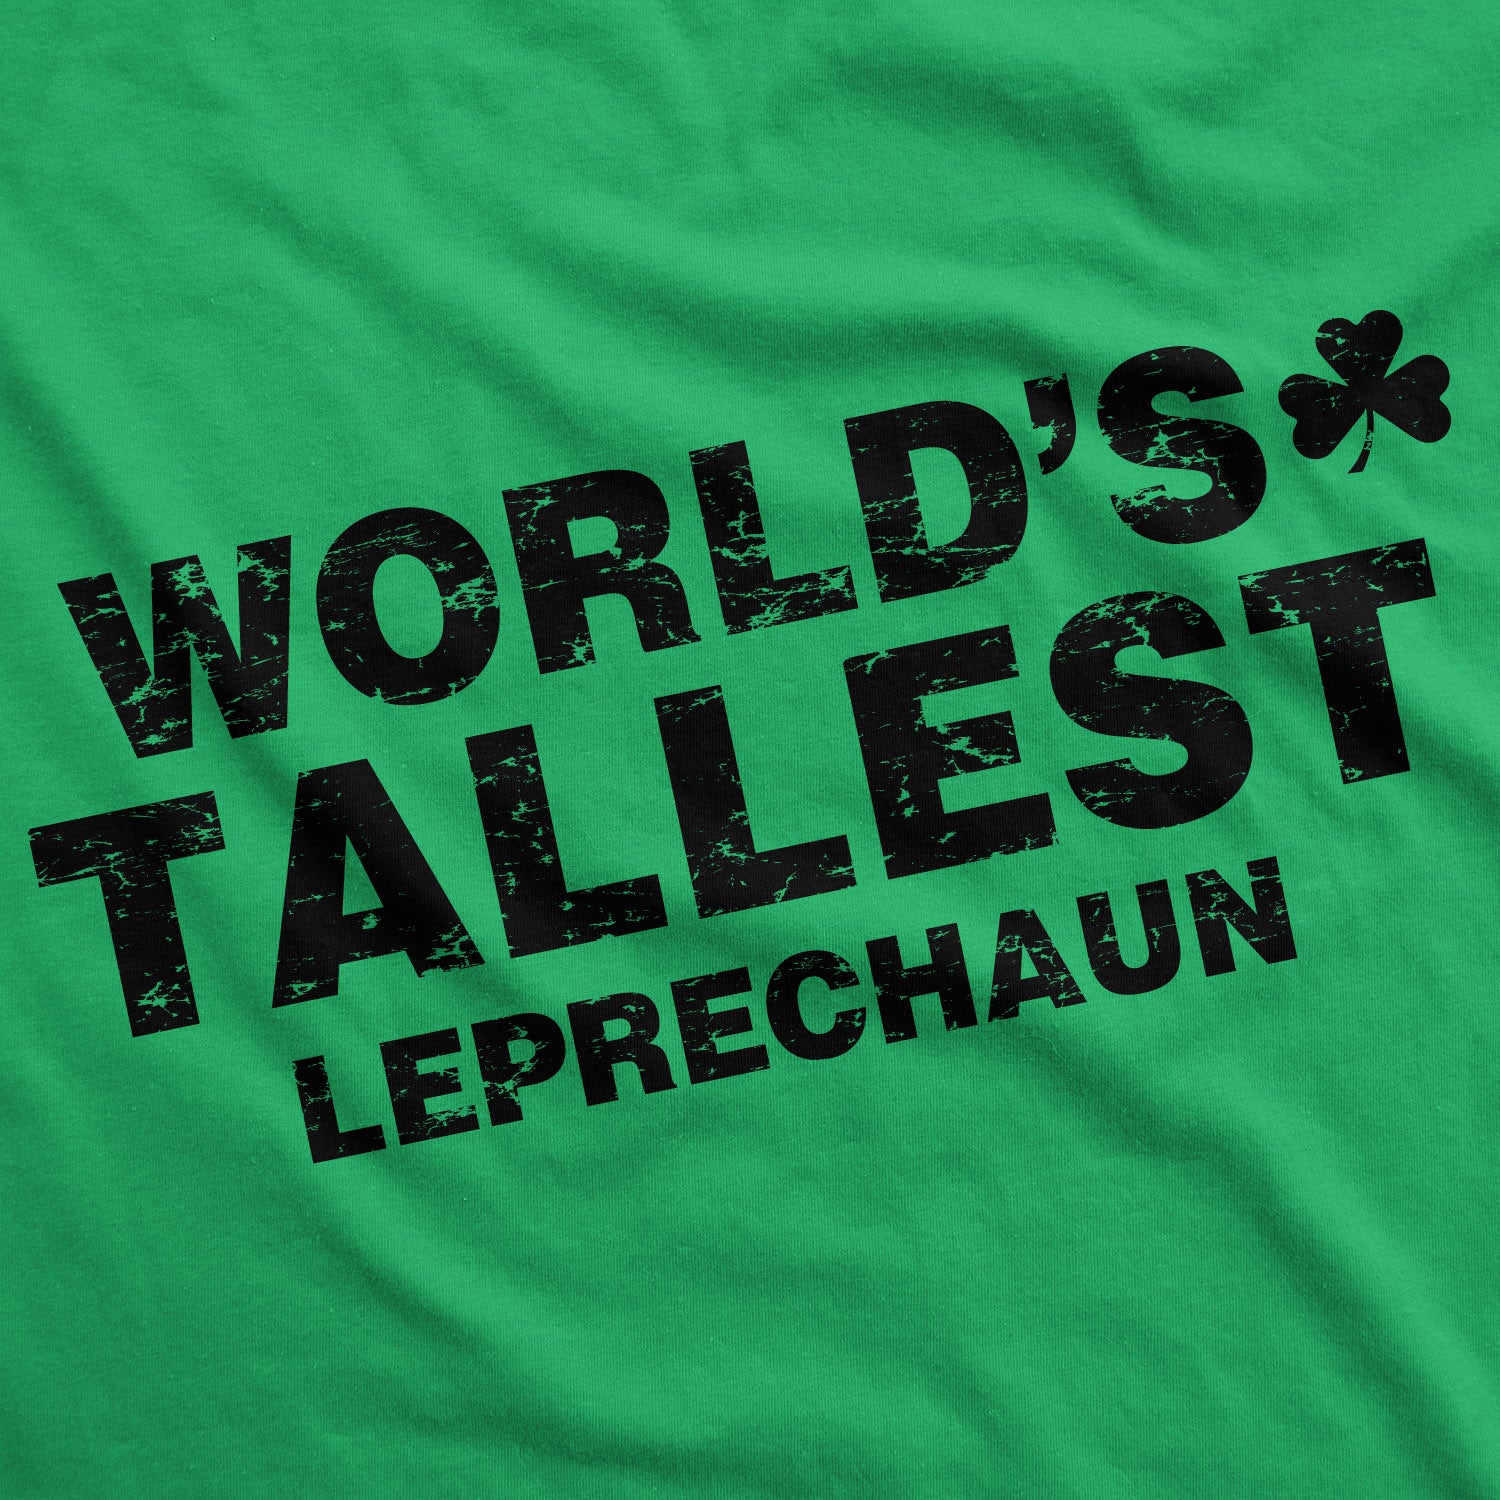 Funny Green World's Tallest Leprechaun Hoodie Nerdy Saint Patrick's Day Tee